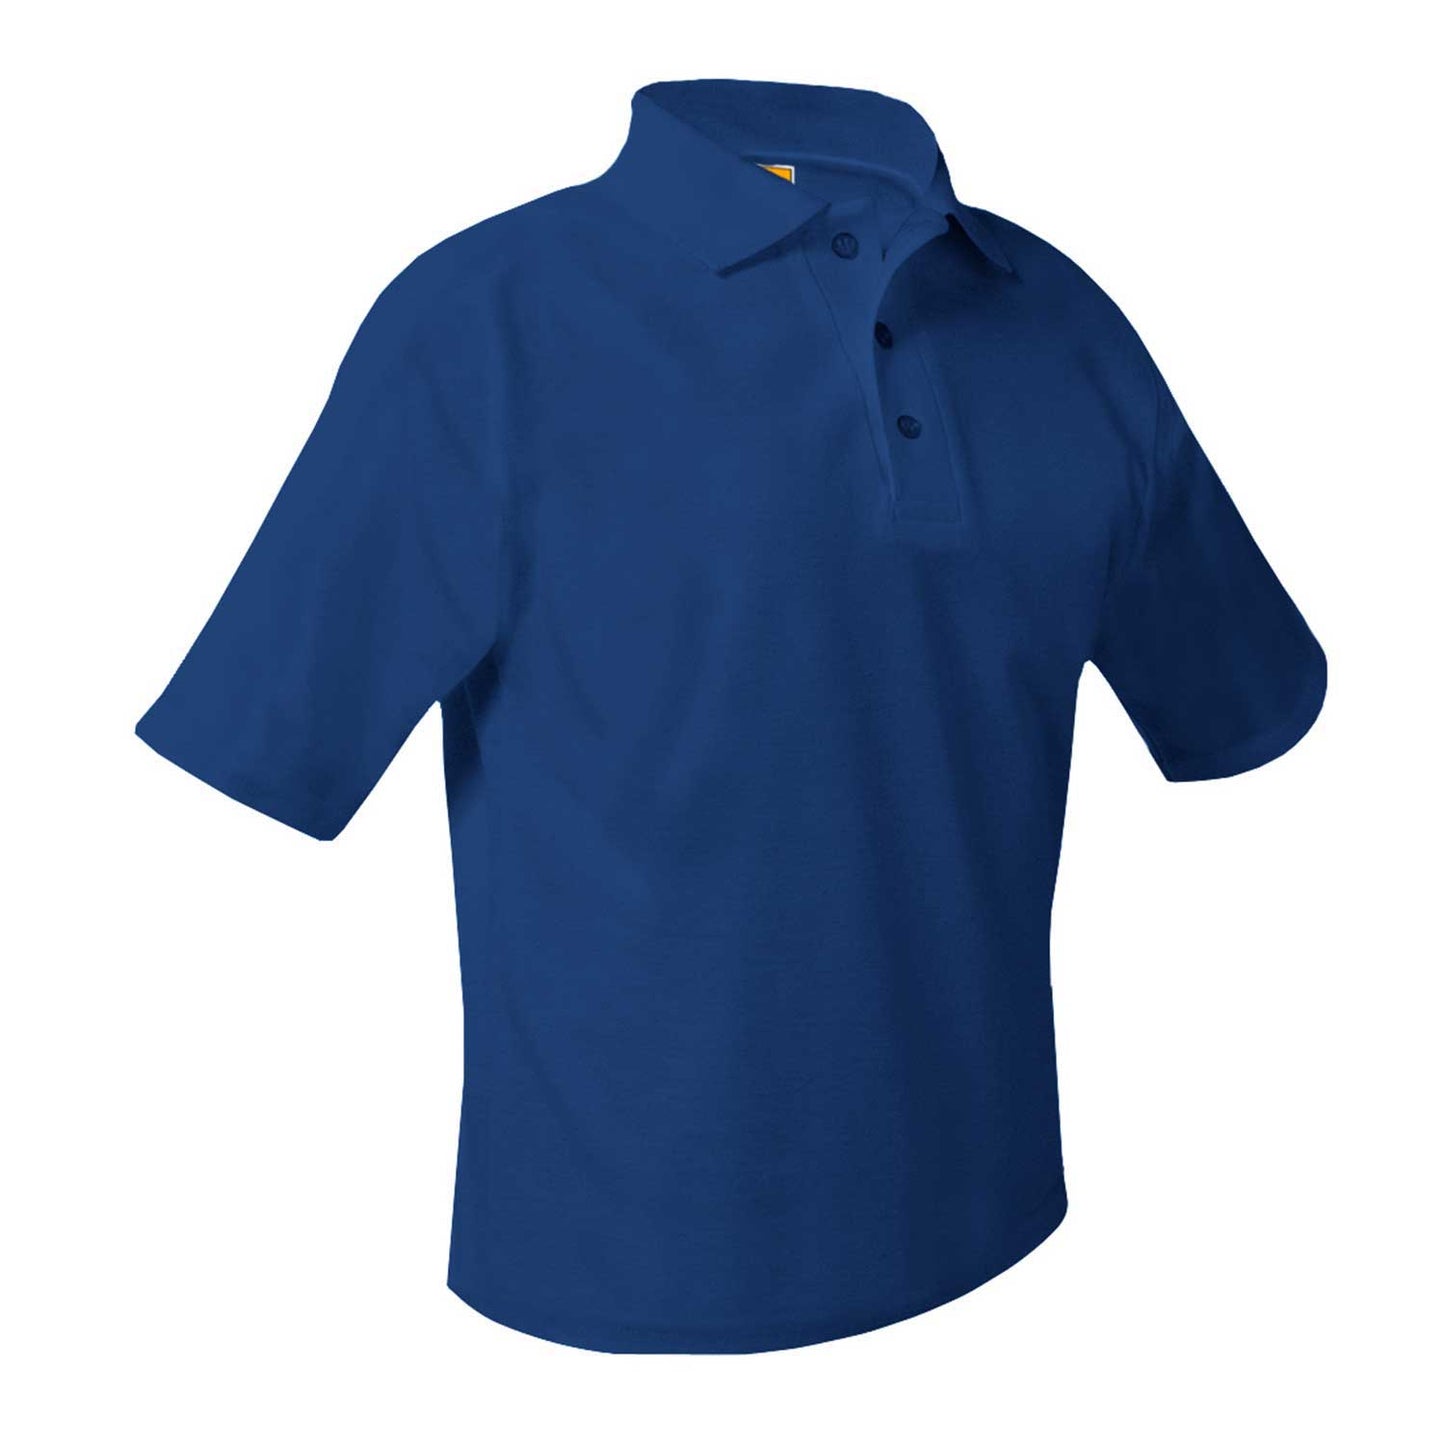 Unisex Pique Polo Shirt, Short Sleeves, Hemmed w/Logo - 1101